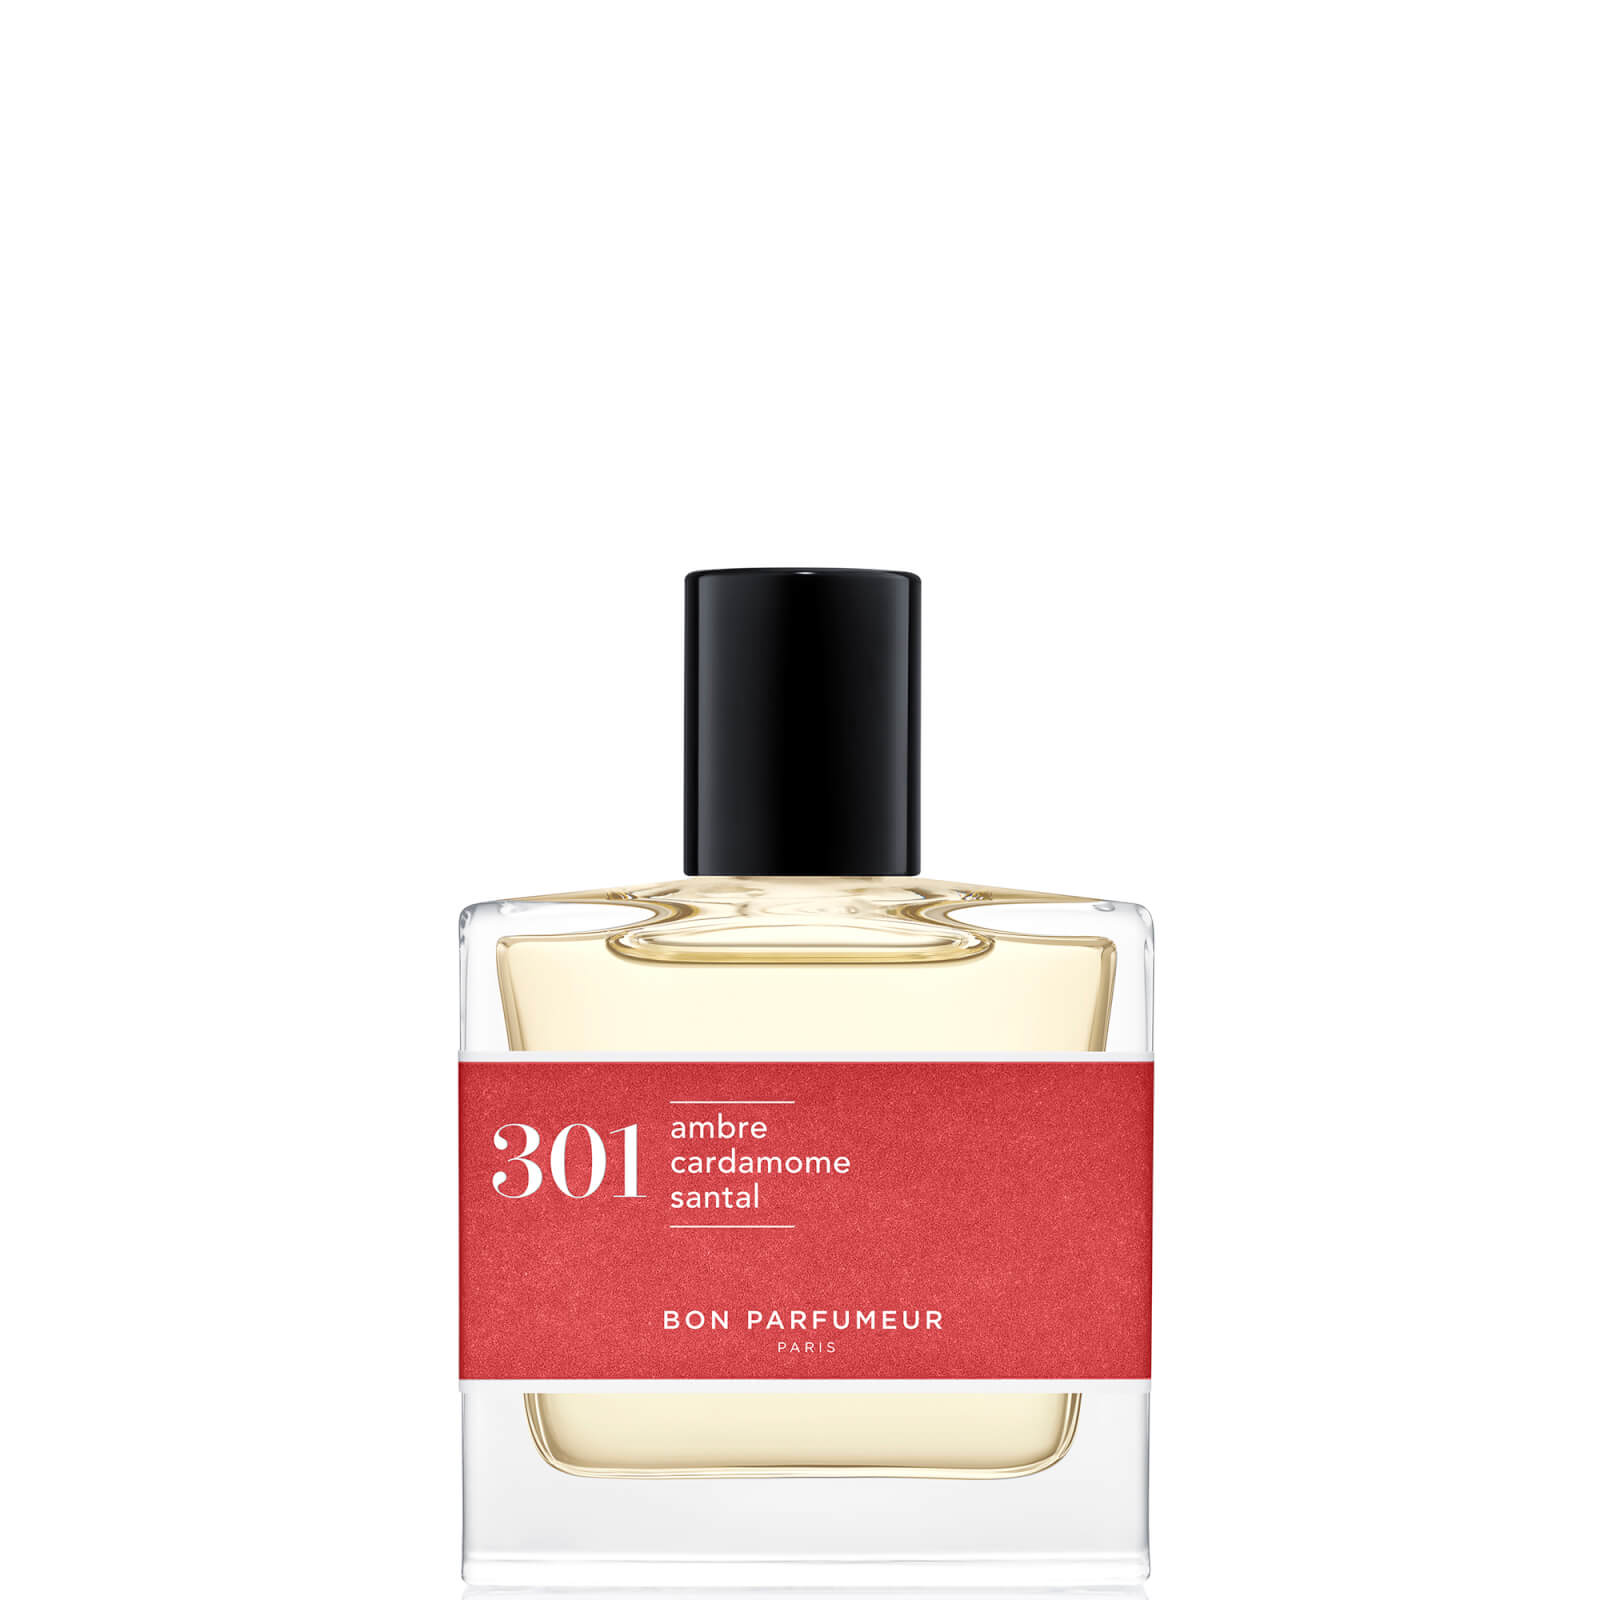 Photos - Women's Fragrance Bon Parfumeur 301 Sandalwood Amber Cardamom Eau de Parfum - 30ml BP301EDP3 